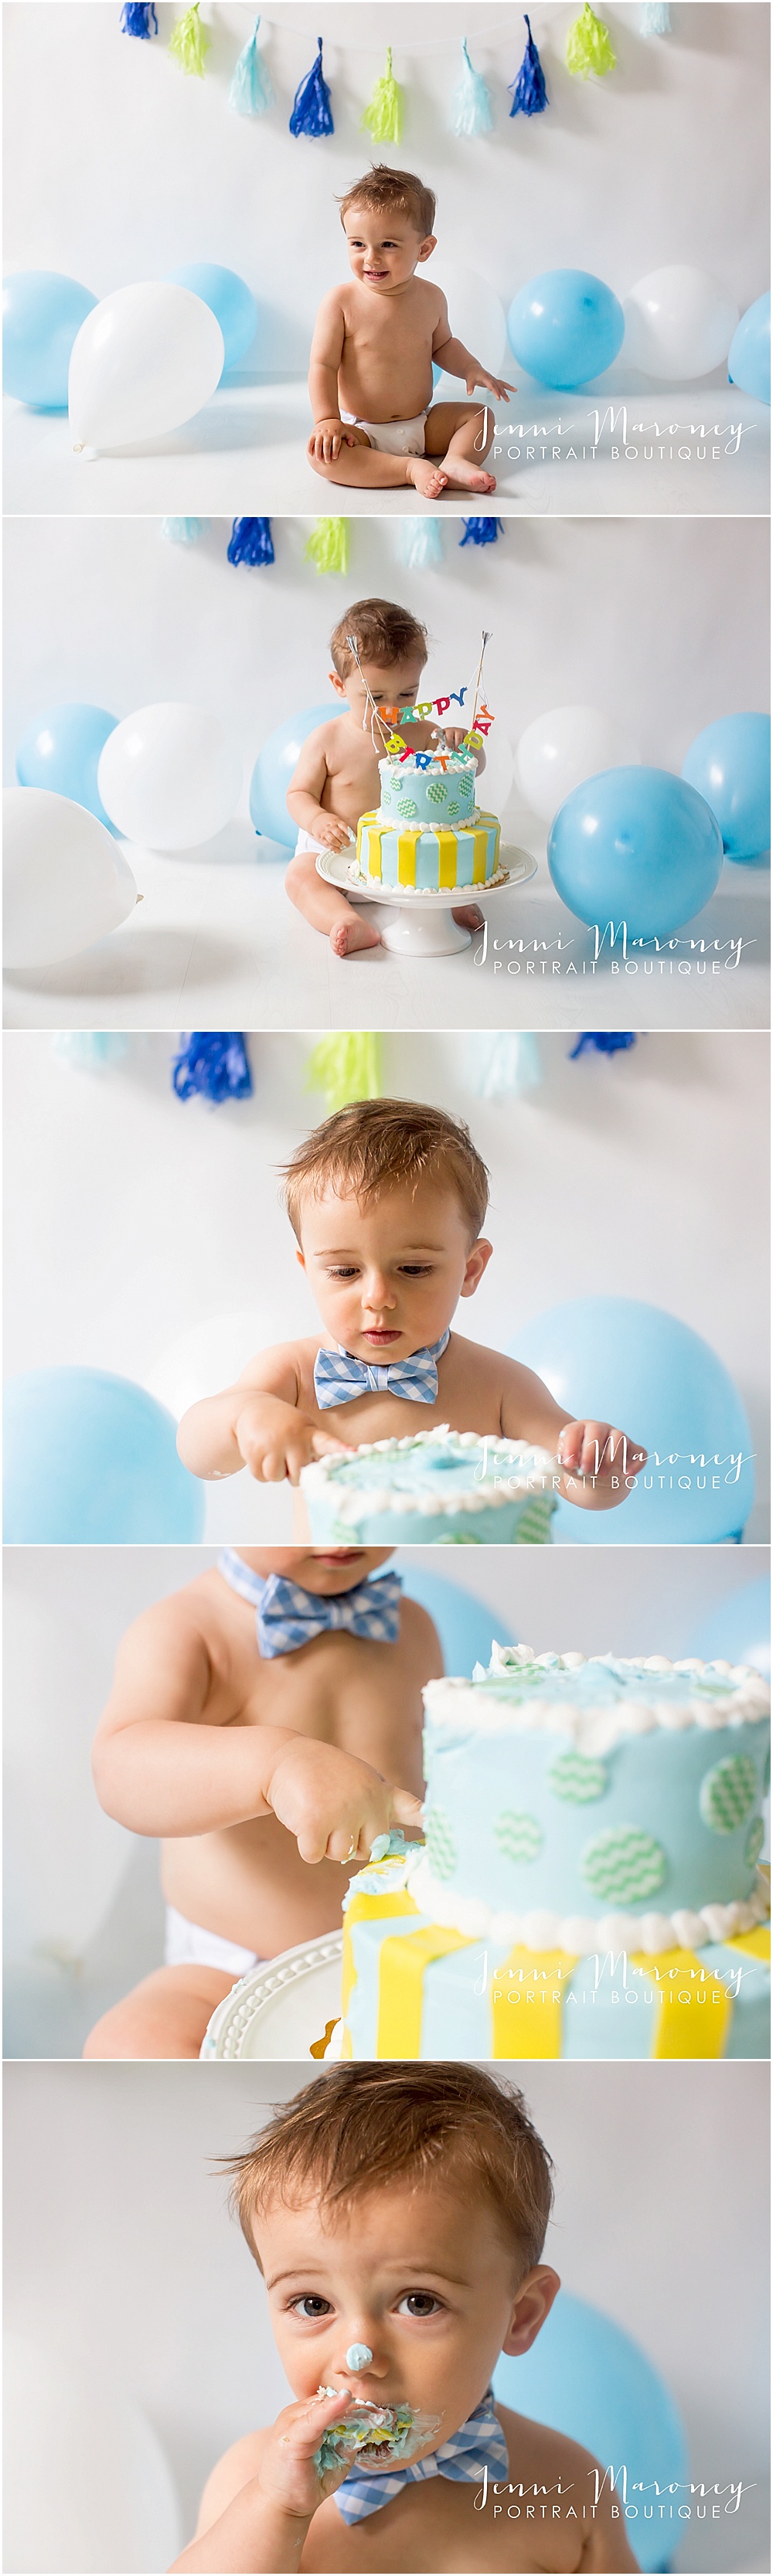 blue and white cake smash session for little boy with Denver newborn photographer Jenni Maroney